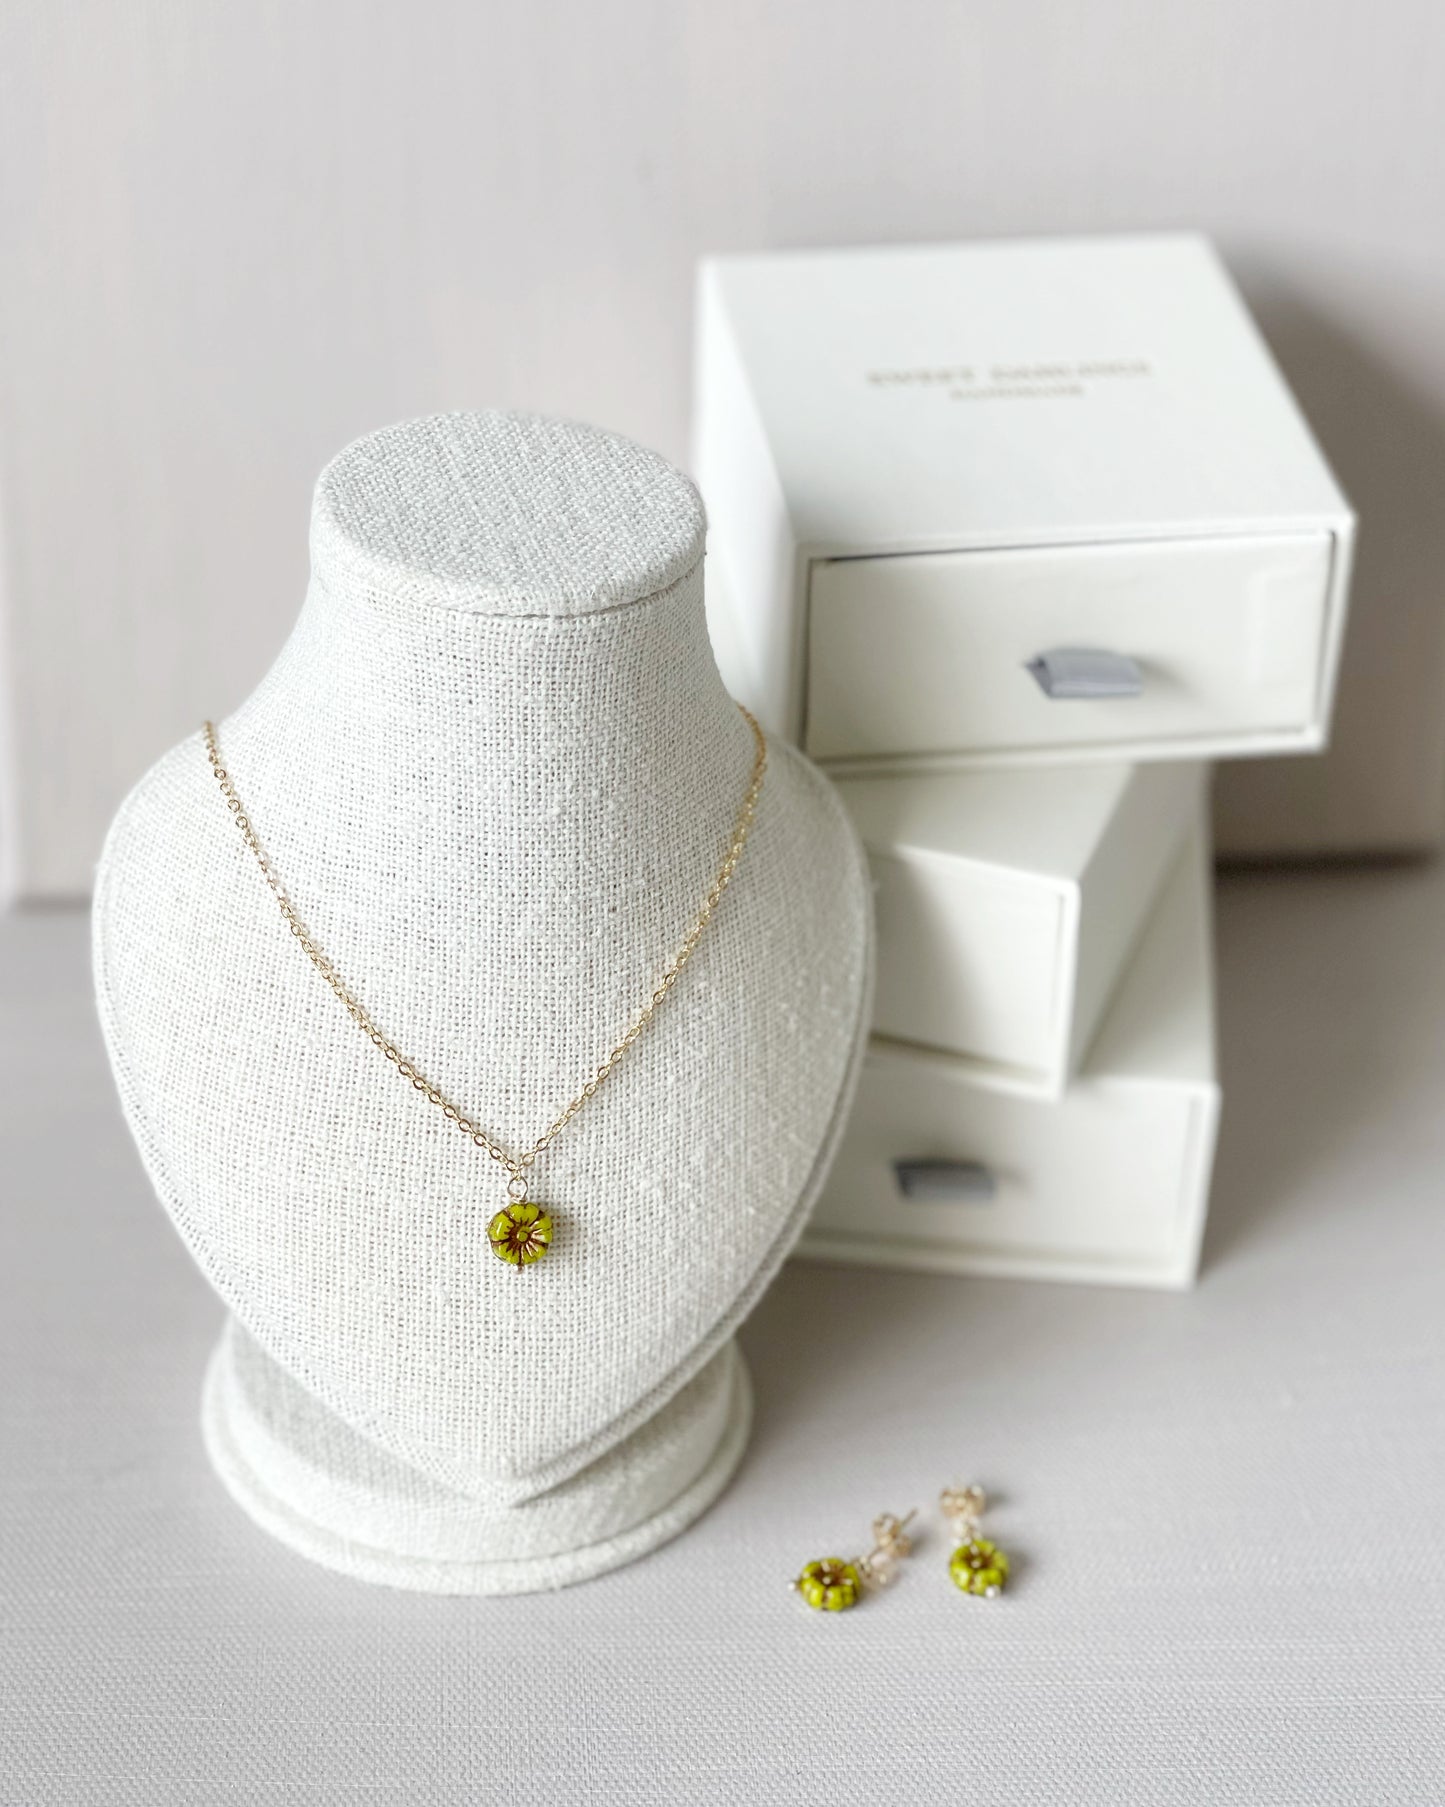 Mini sakura necklace and earrings set in avocado